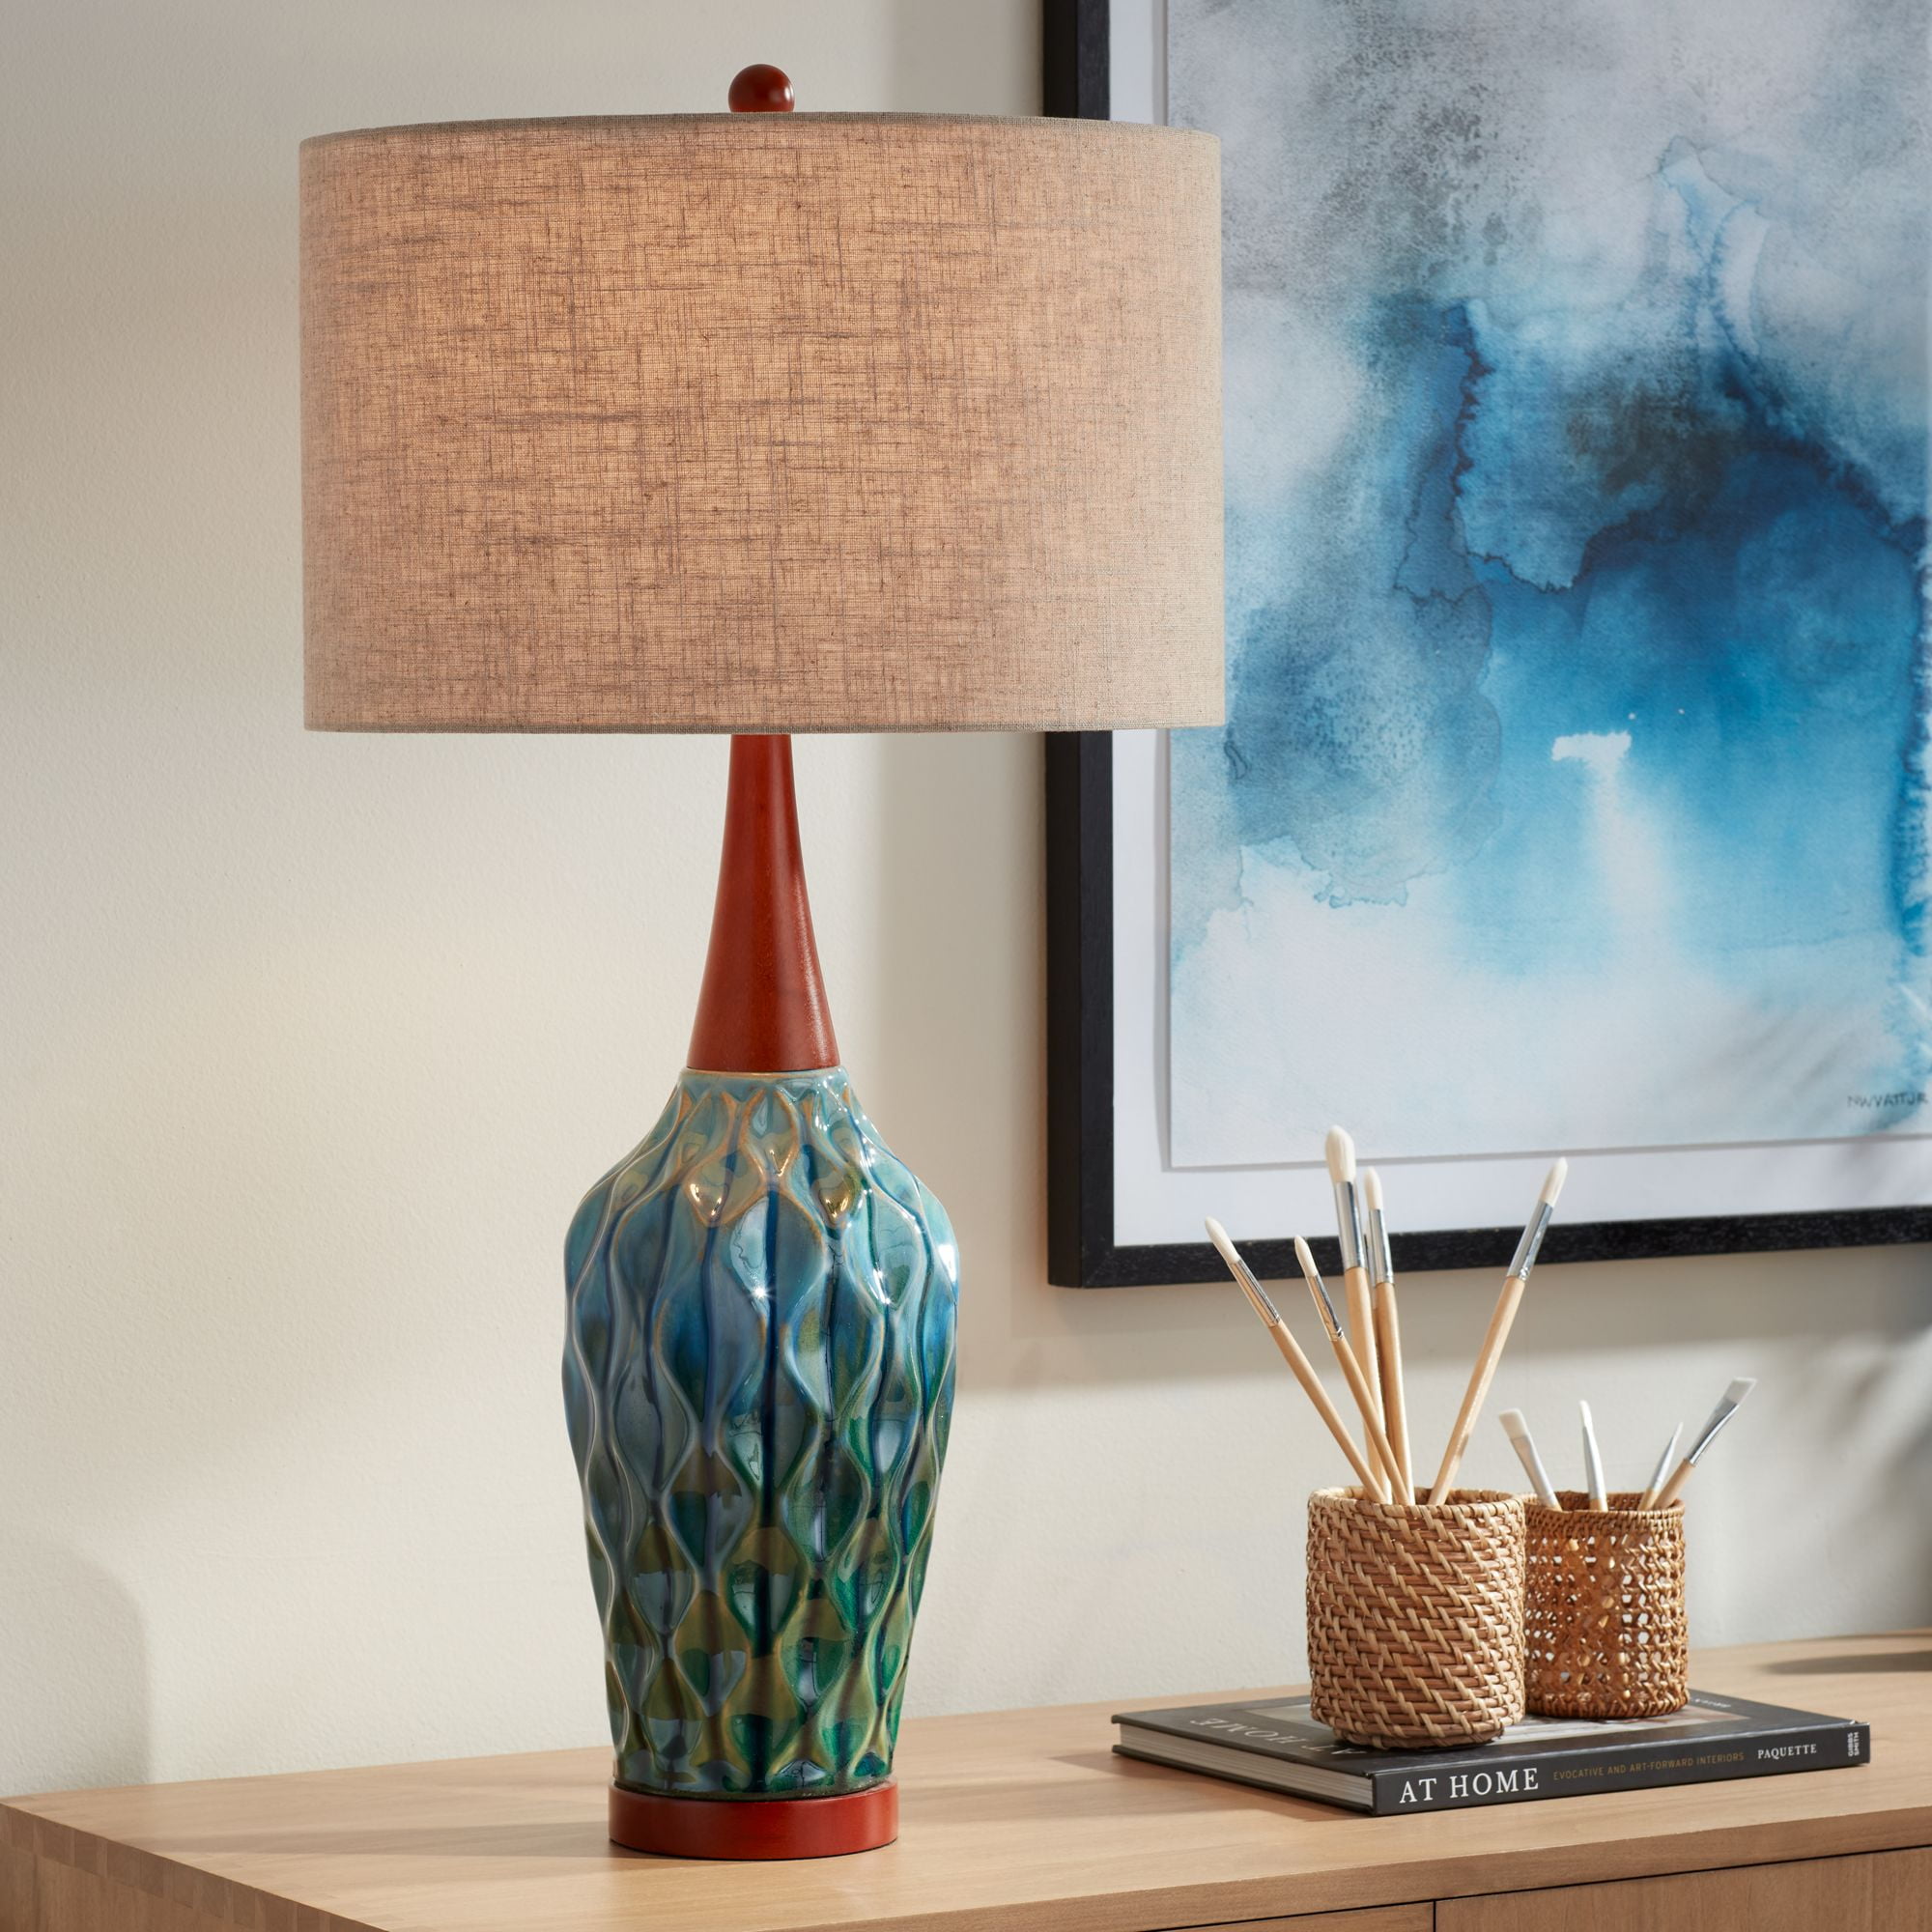 Aclarar pastor dividir 360 Lighting Mid Century Modern Table Lamp 30" Tall Ceramic Blue Teal Glaze  Wood Handmade Linen Drum Shade for Living Room Bedroom (Colors May Vary) -  Walmart.com